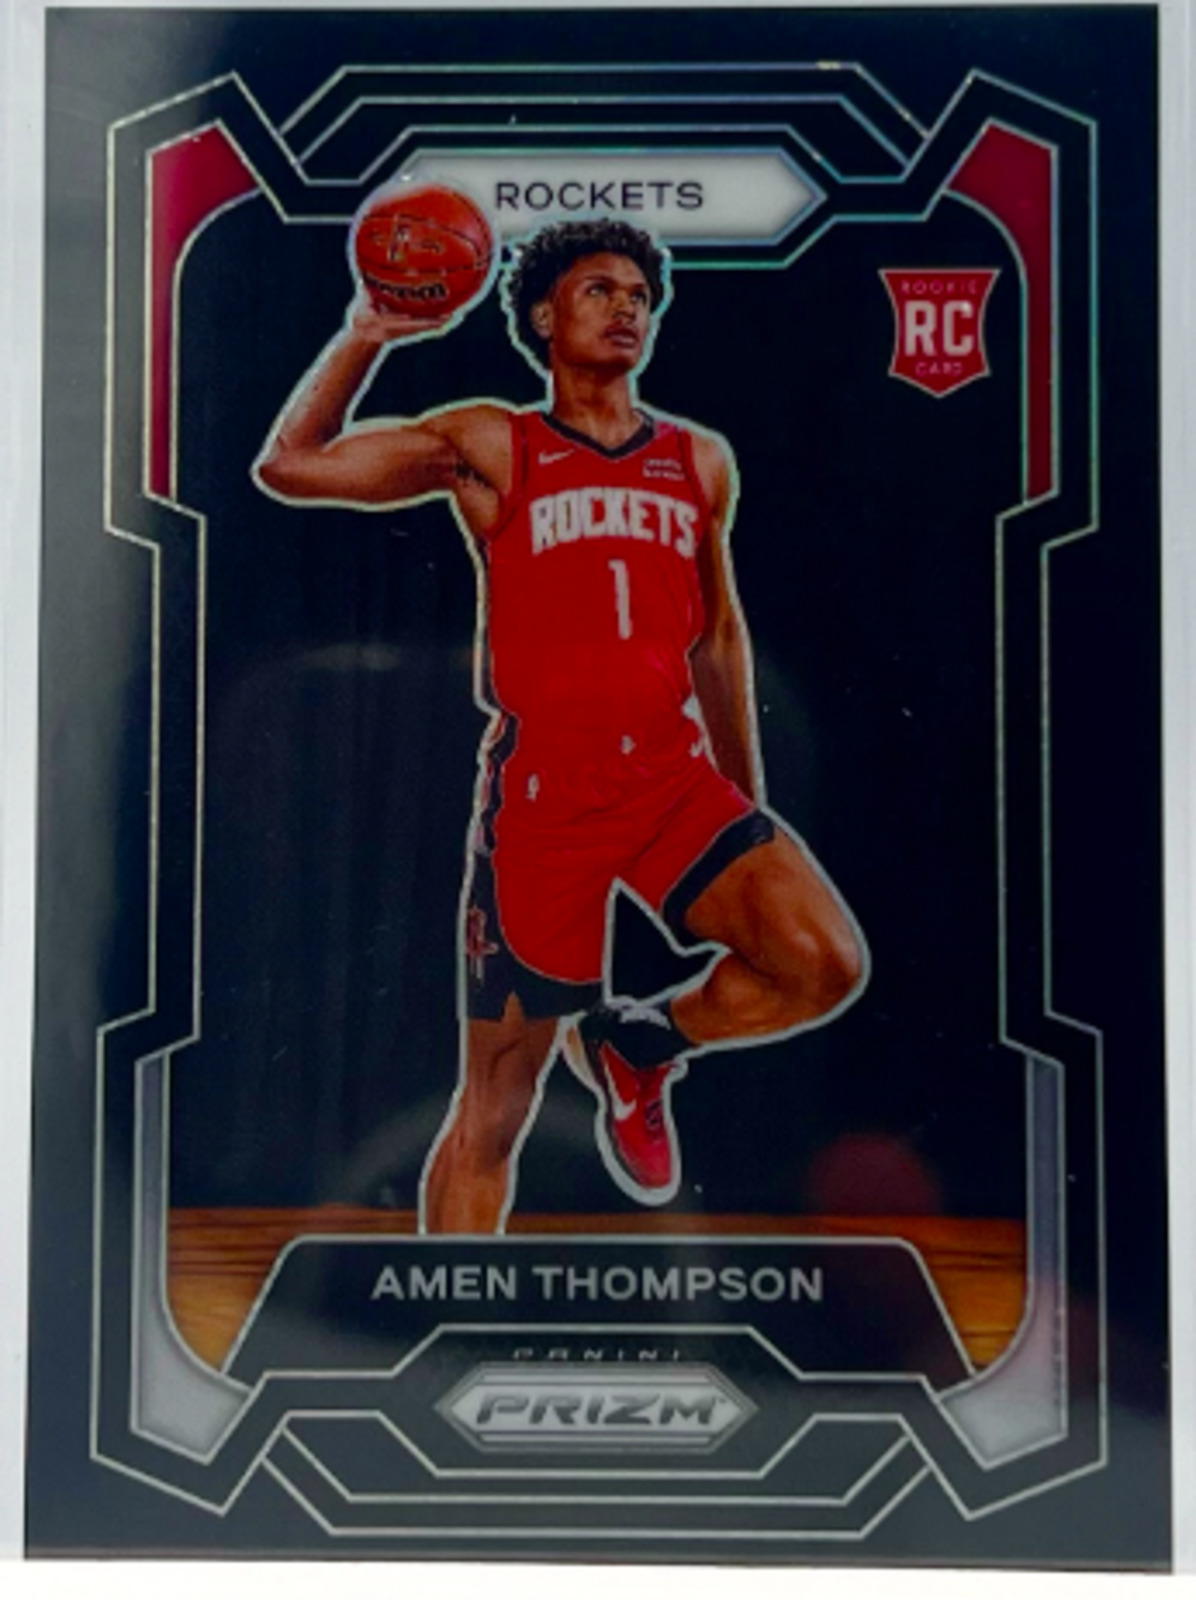 2023 Prizm Amen Thompson True Black 1/1 rookie card